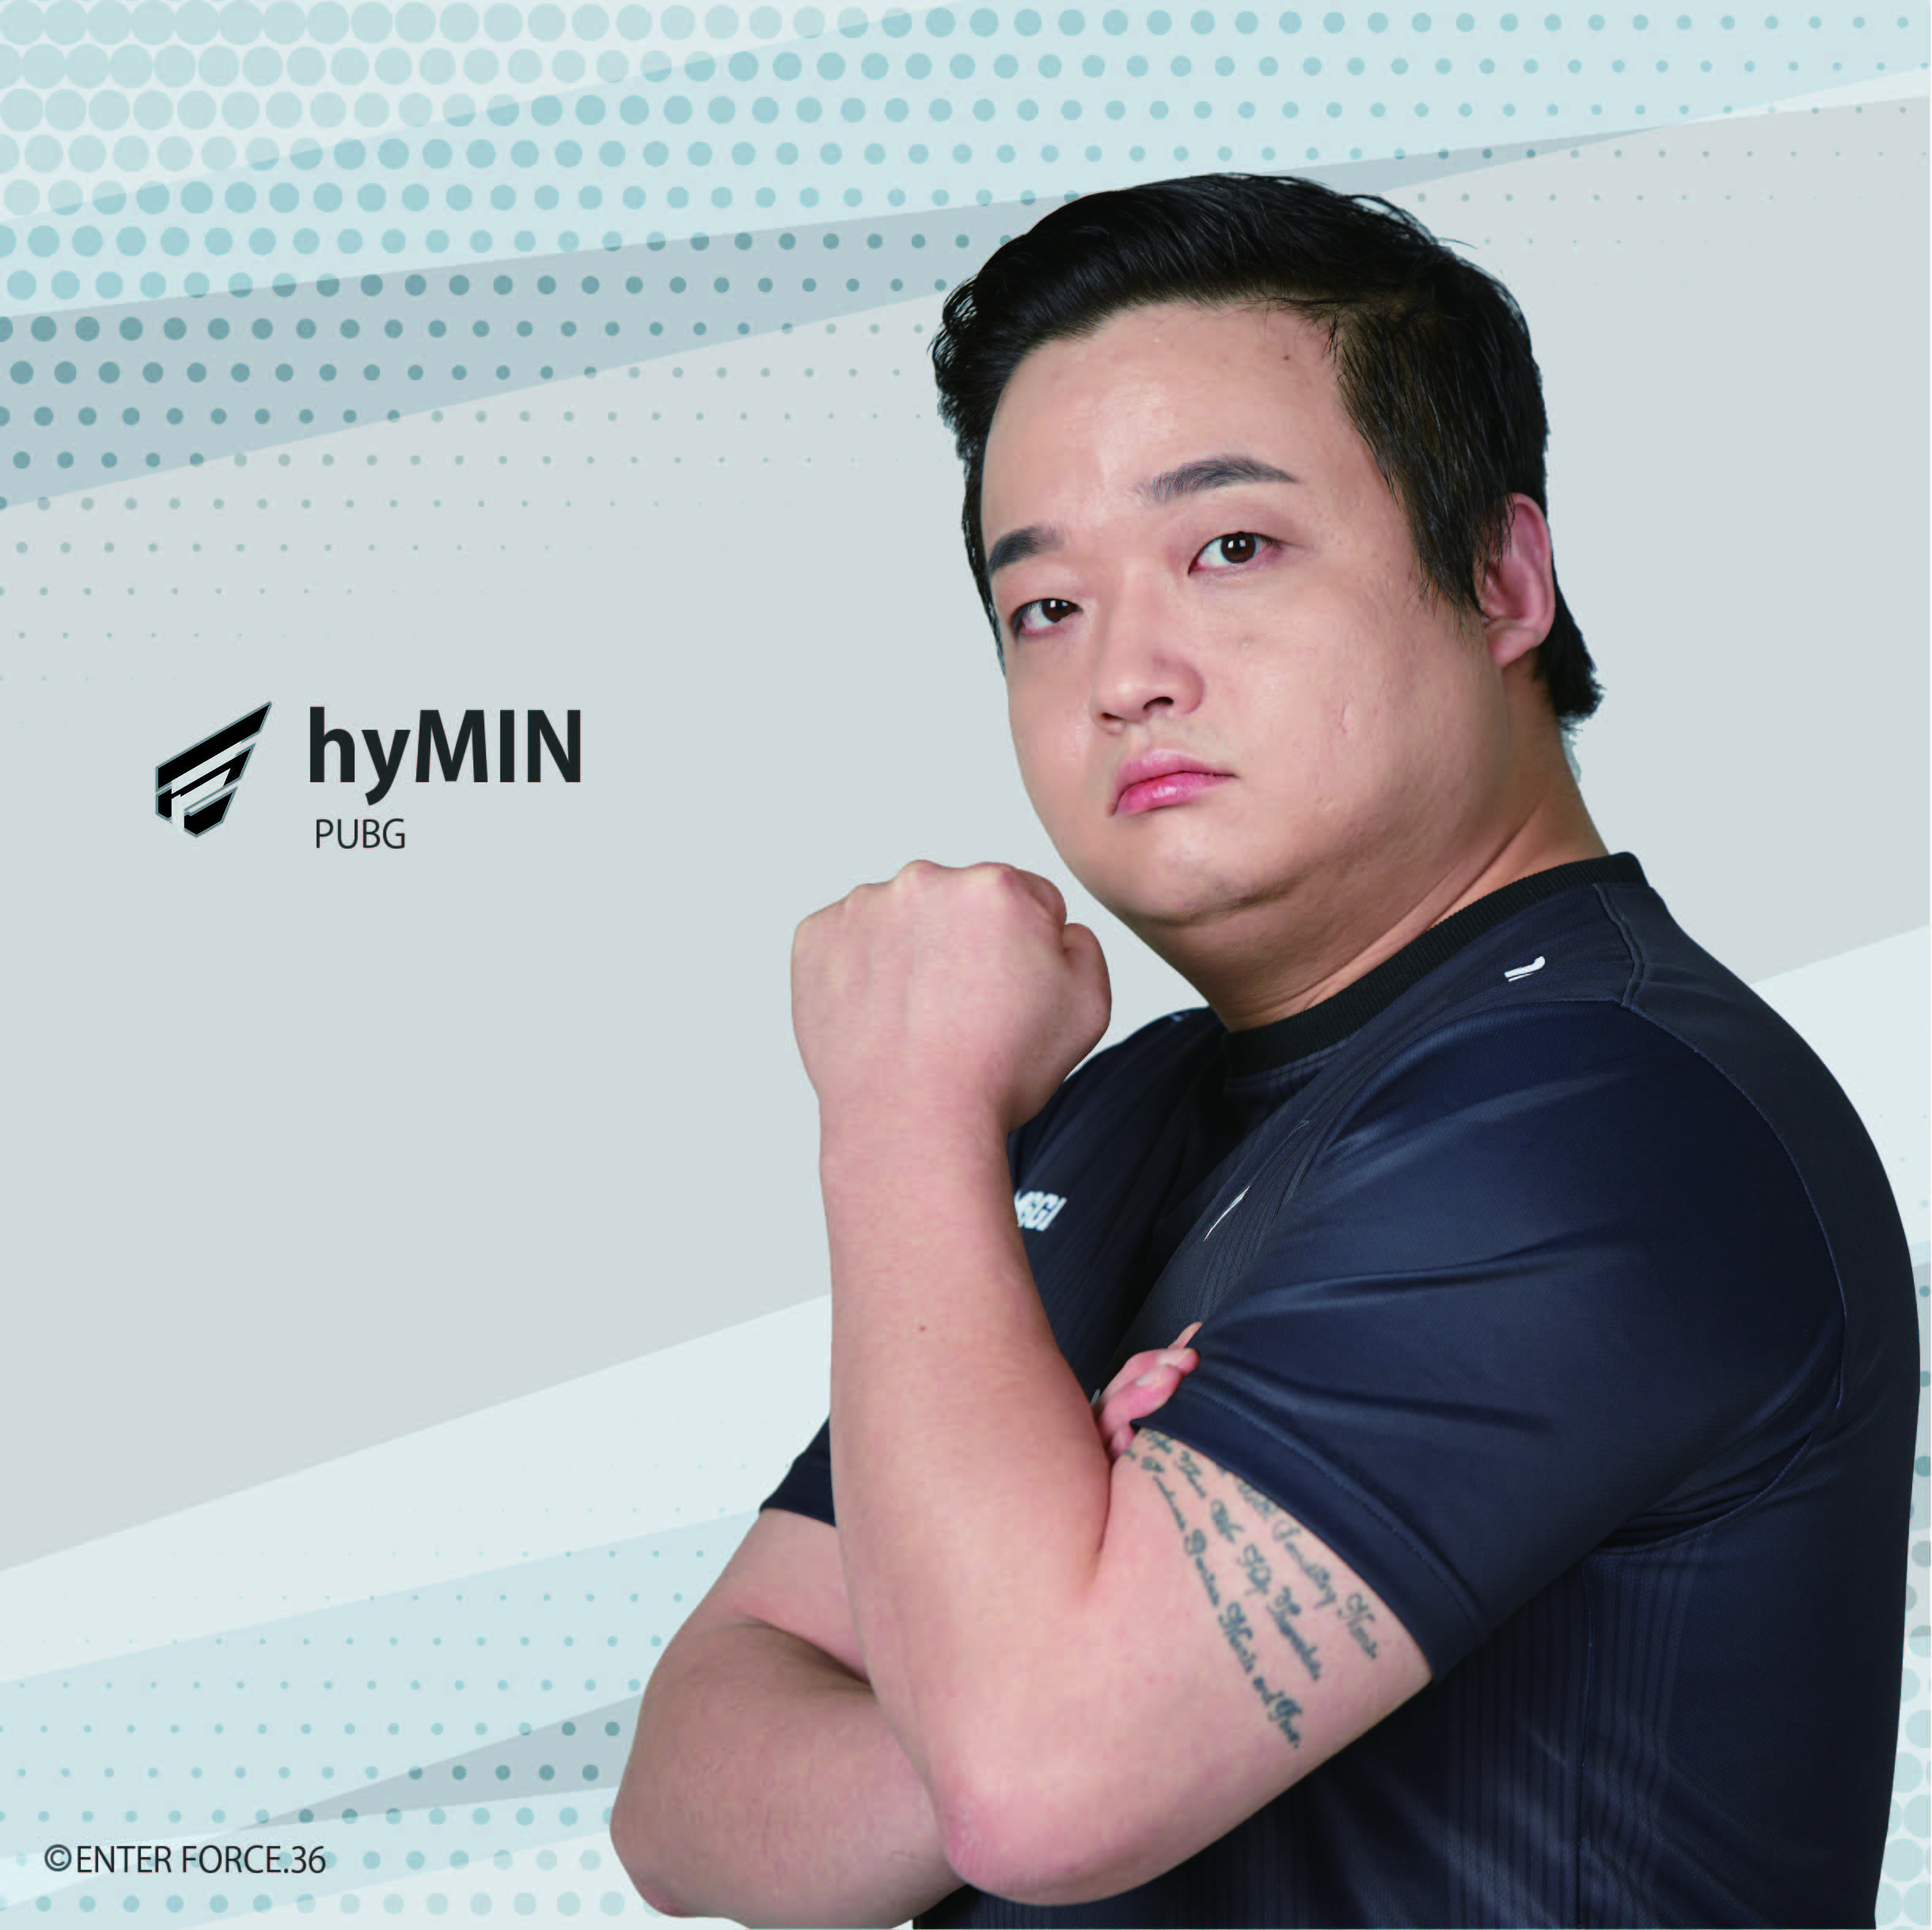 hyMIN [Coach]